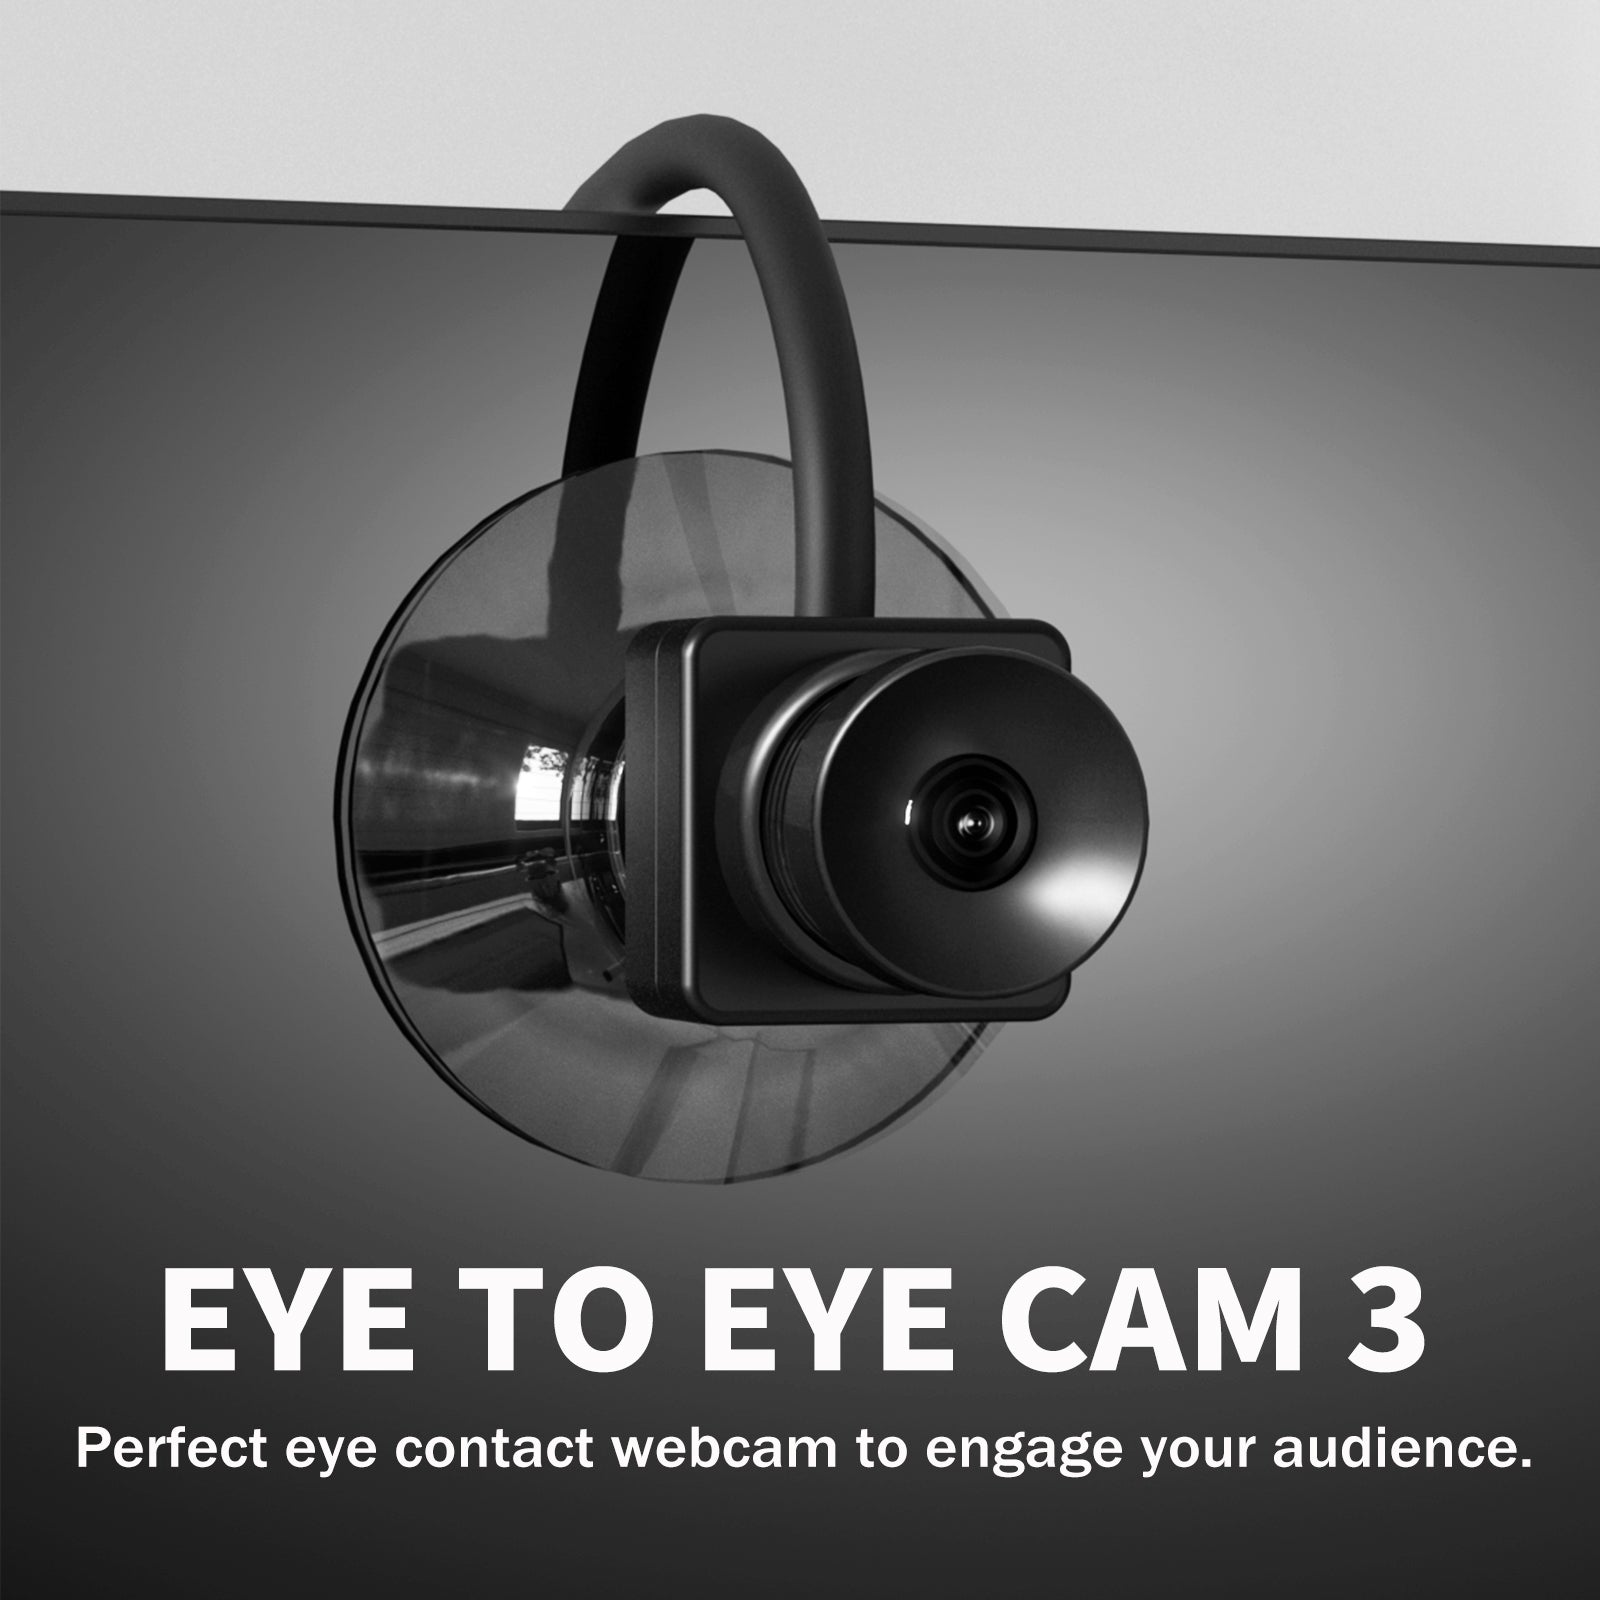 EYE TO EYE CAM 3 eye to cam 2 updated version Eye to Eye Cam 3 eye